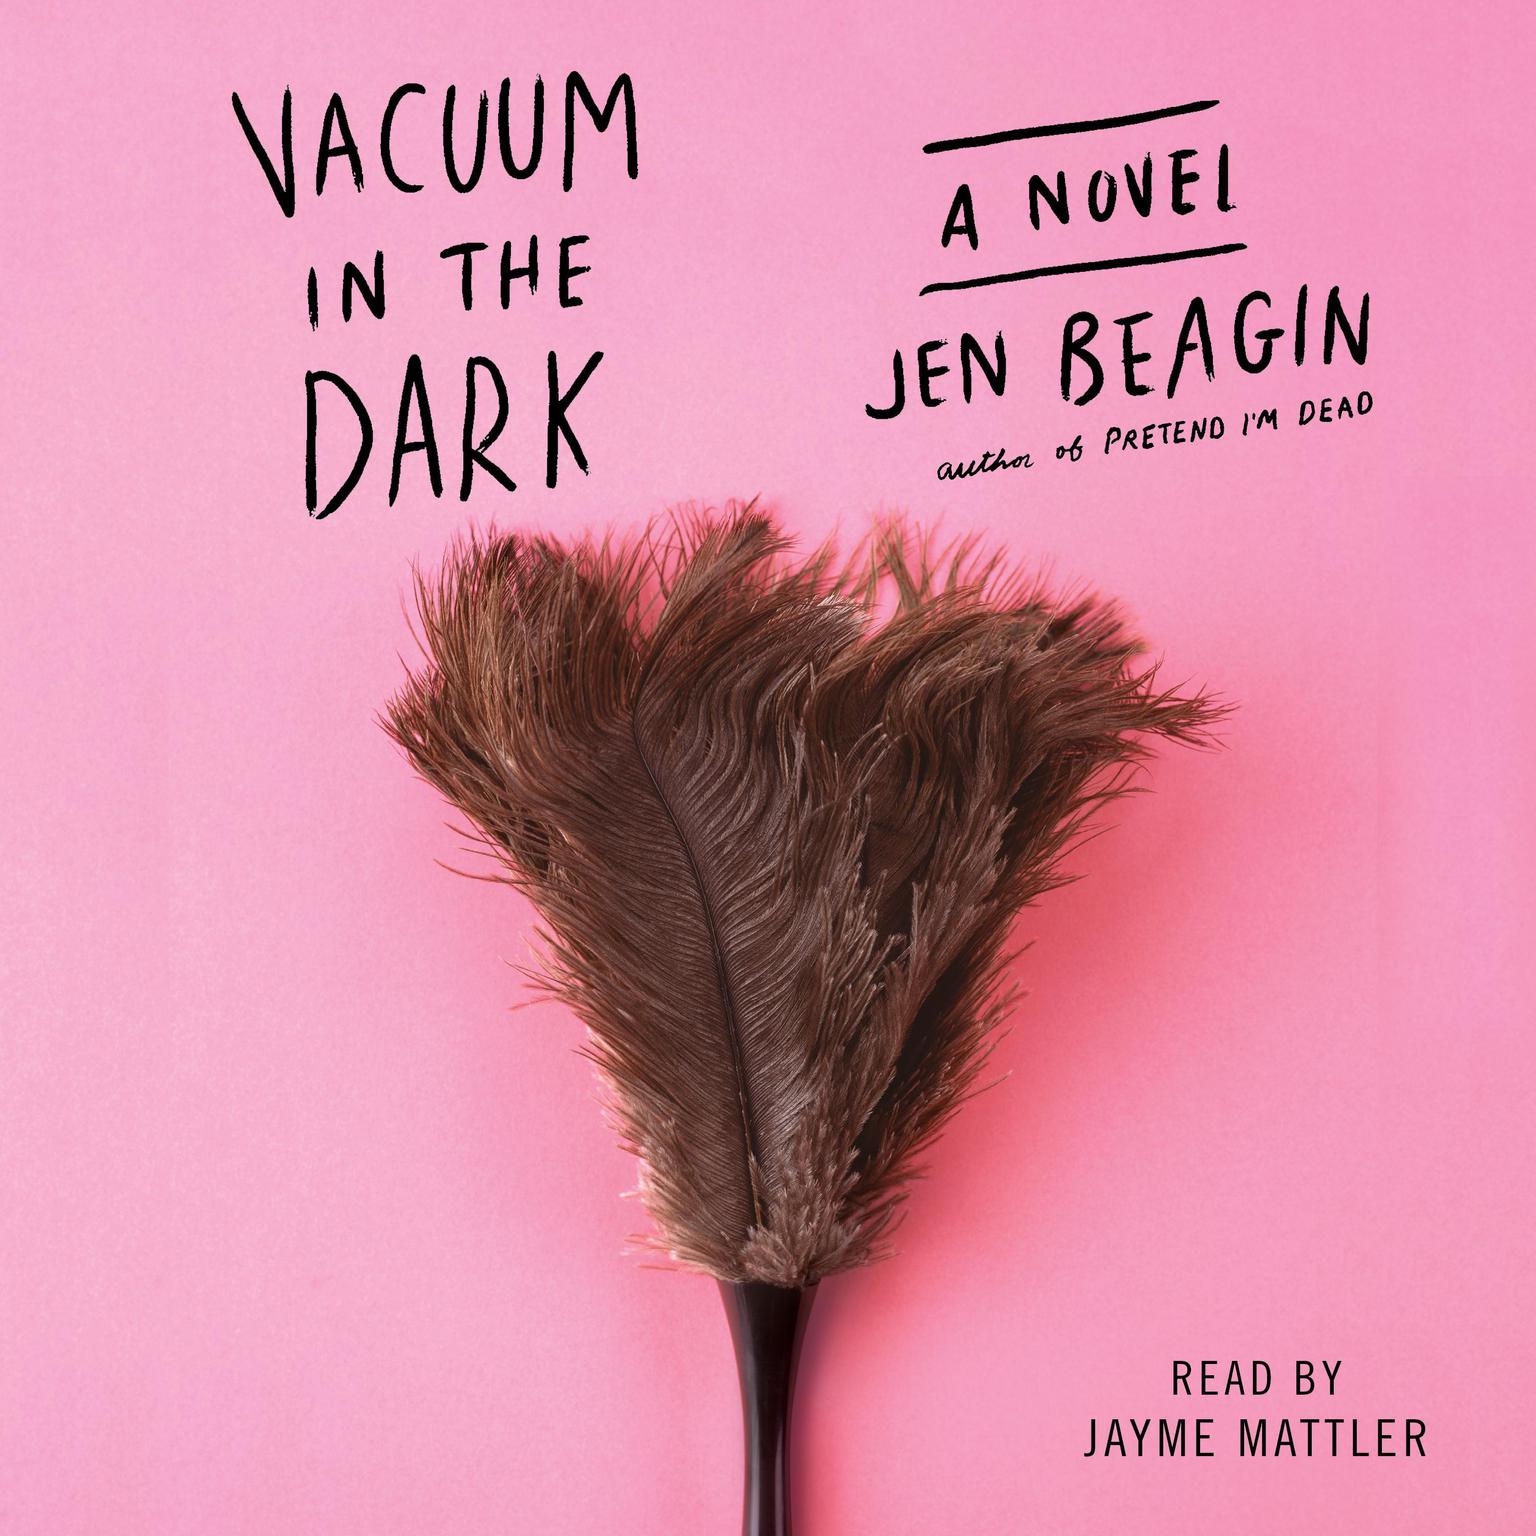 Vacuum in the Dark: A Novel Audiobook, by Jen Beagin